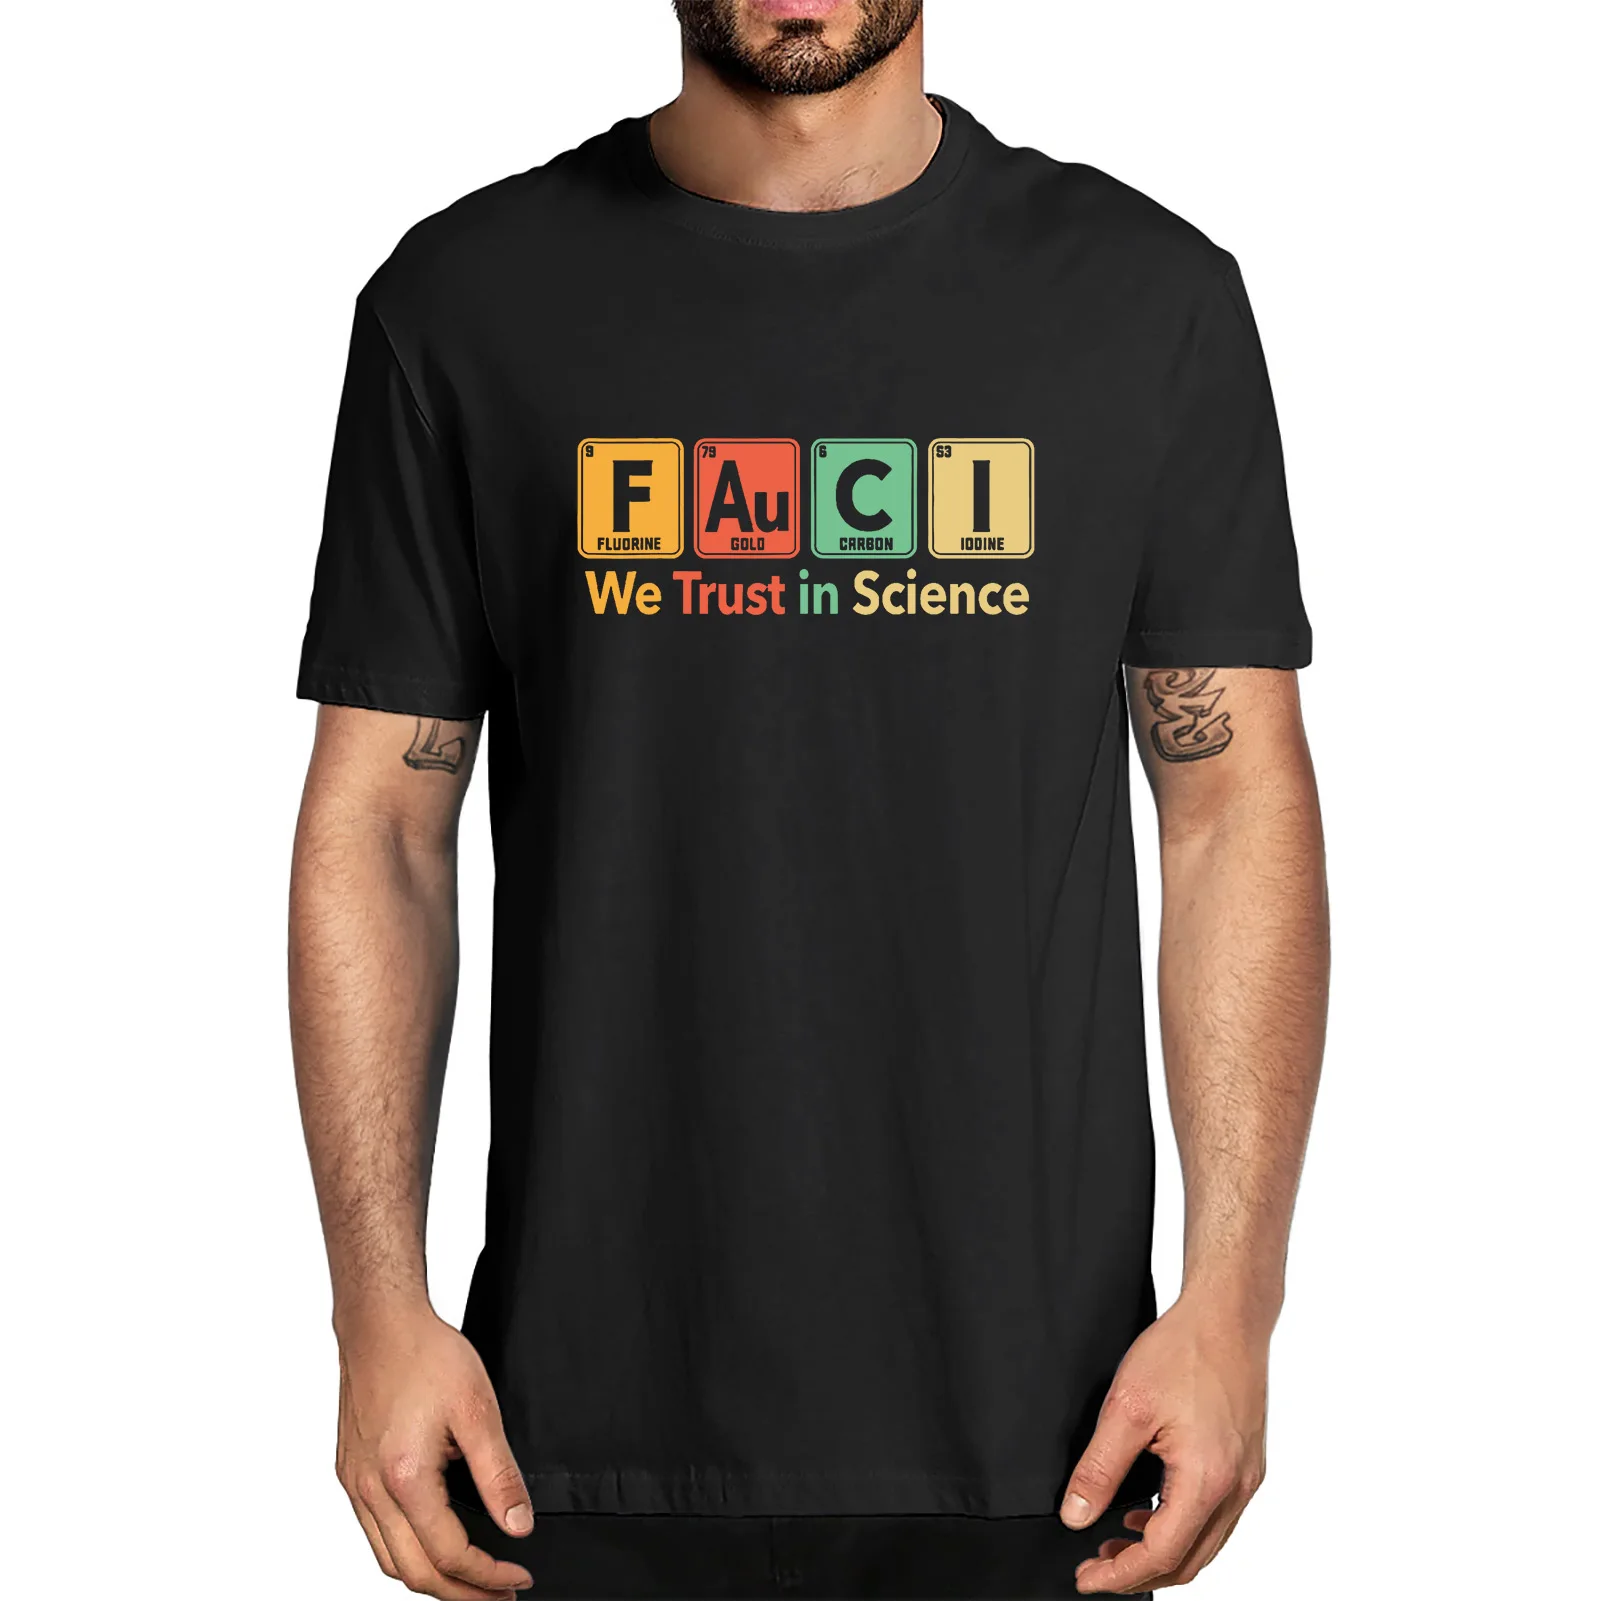 

Unisex Fauci Fludrine Gold Carbon Iddine We Trust In Science Vintage Funny Men's 100% Cotton T-Shirt Streetwear Women Soft Tee